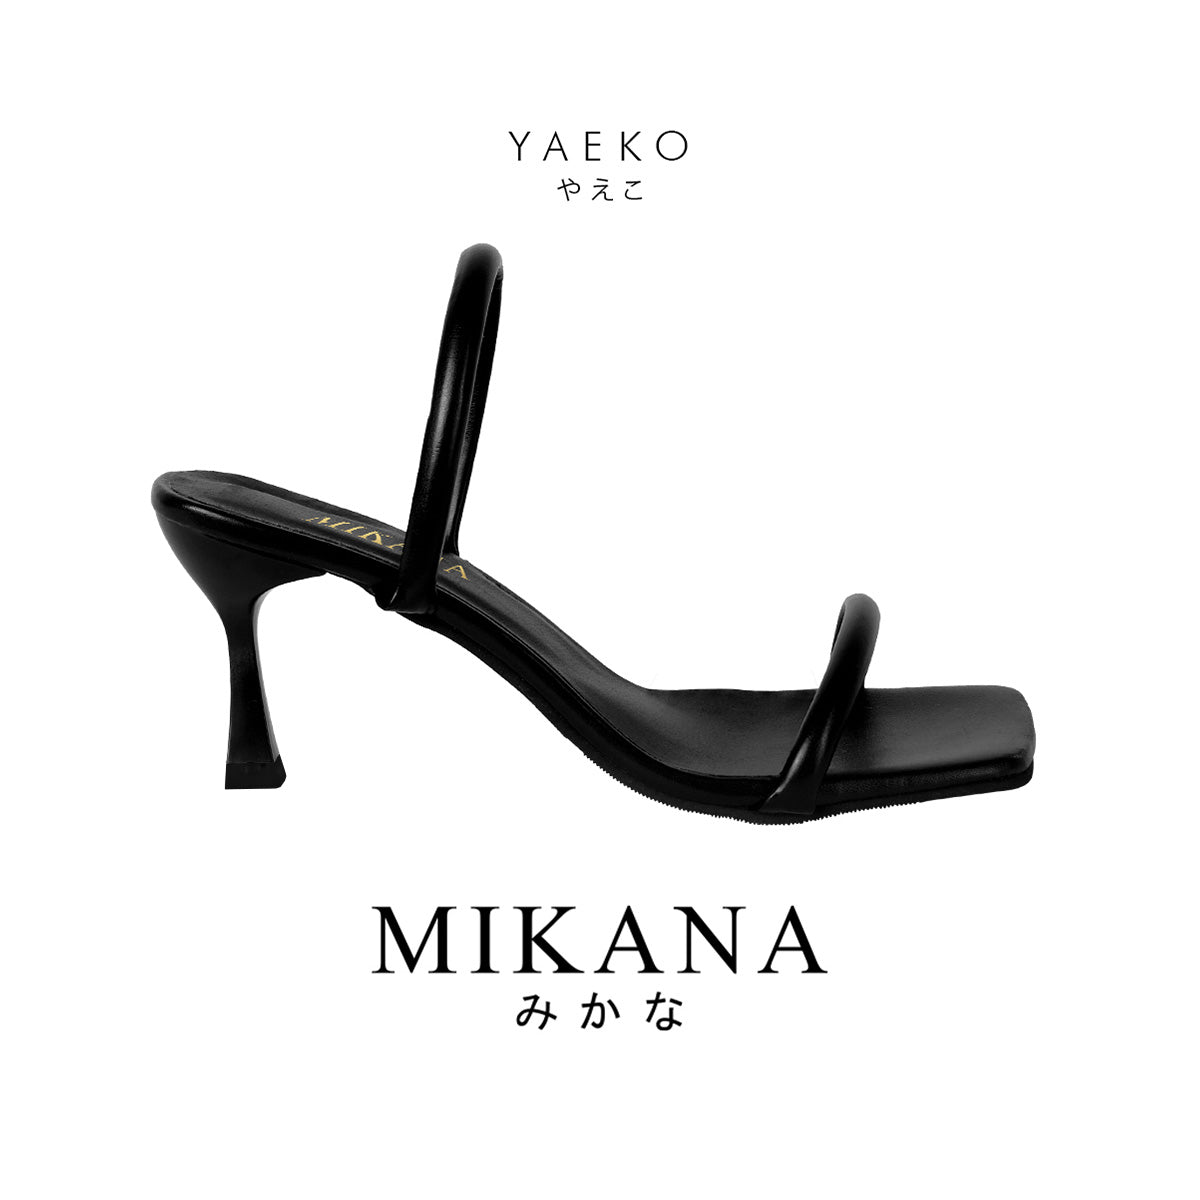 Yaeko Strappy Heels 3 inches Slides Sandals Shoes